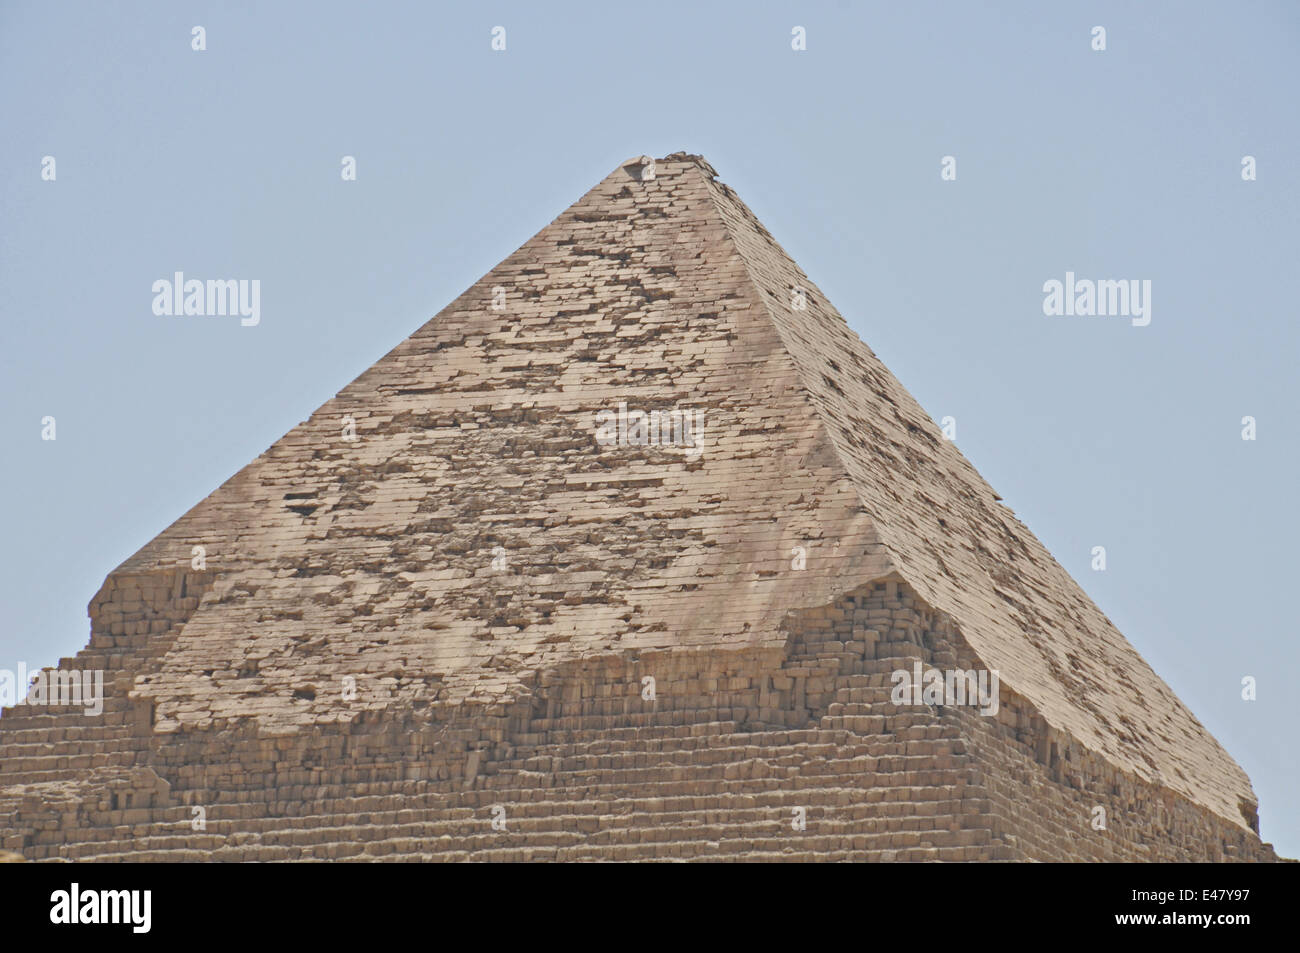 Pyramids of Ancient Egypt Stock Photo - Alamy